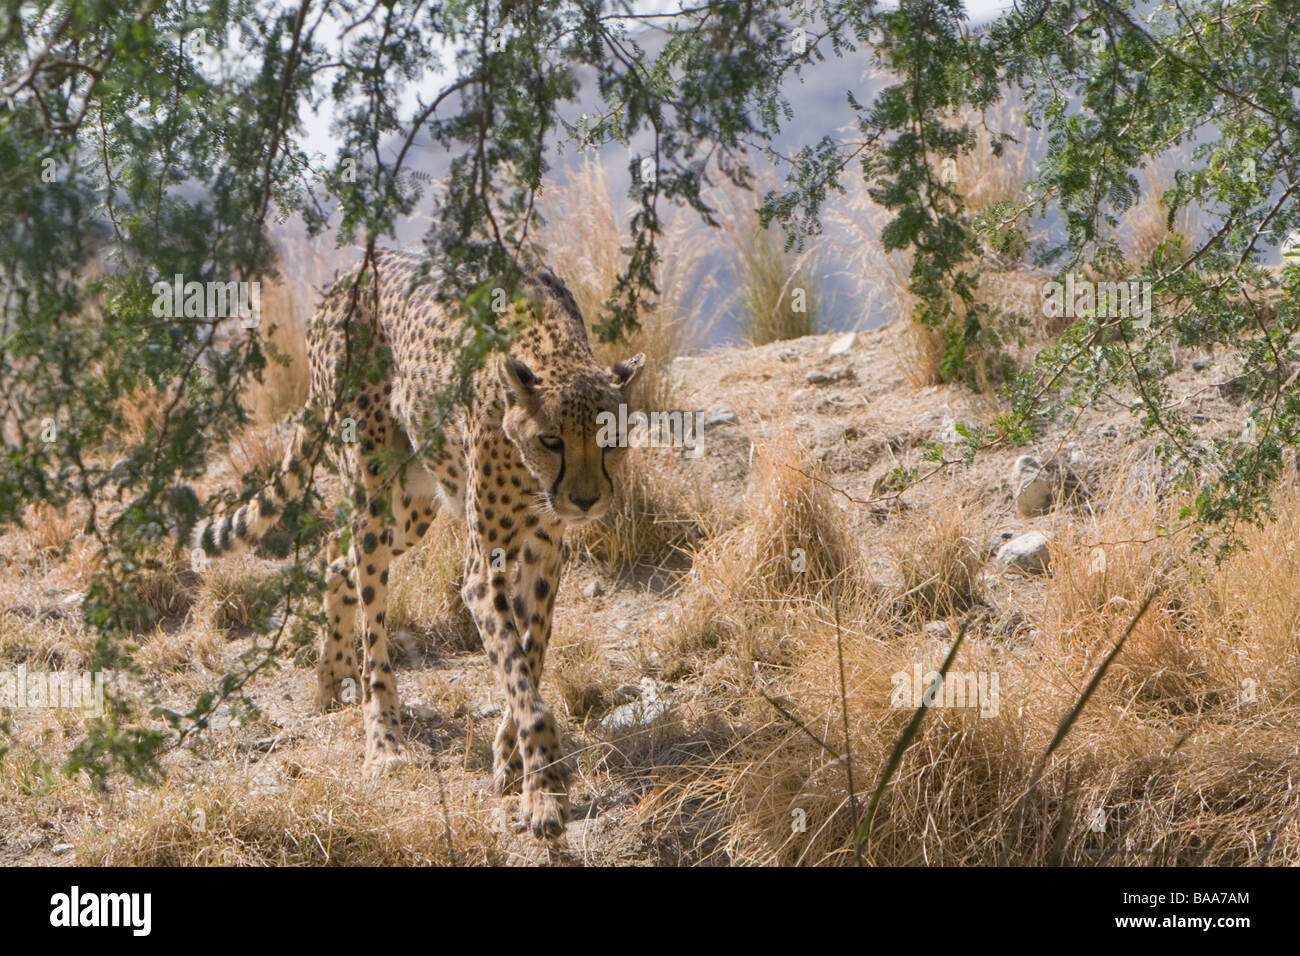 Cheetah descending into ravine Stock Photo